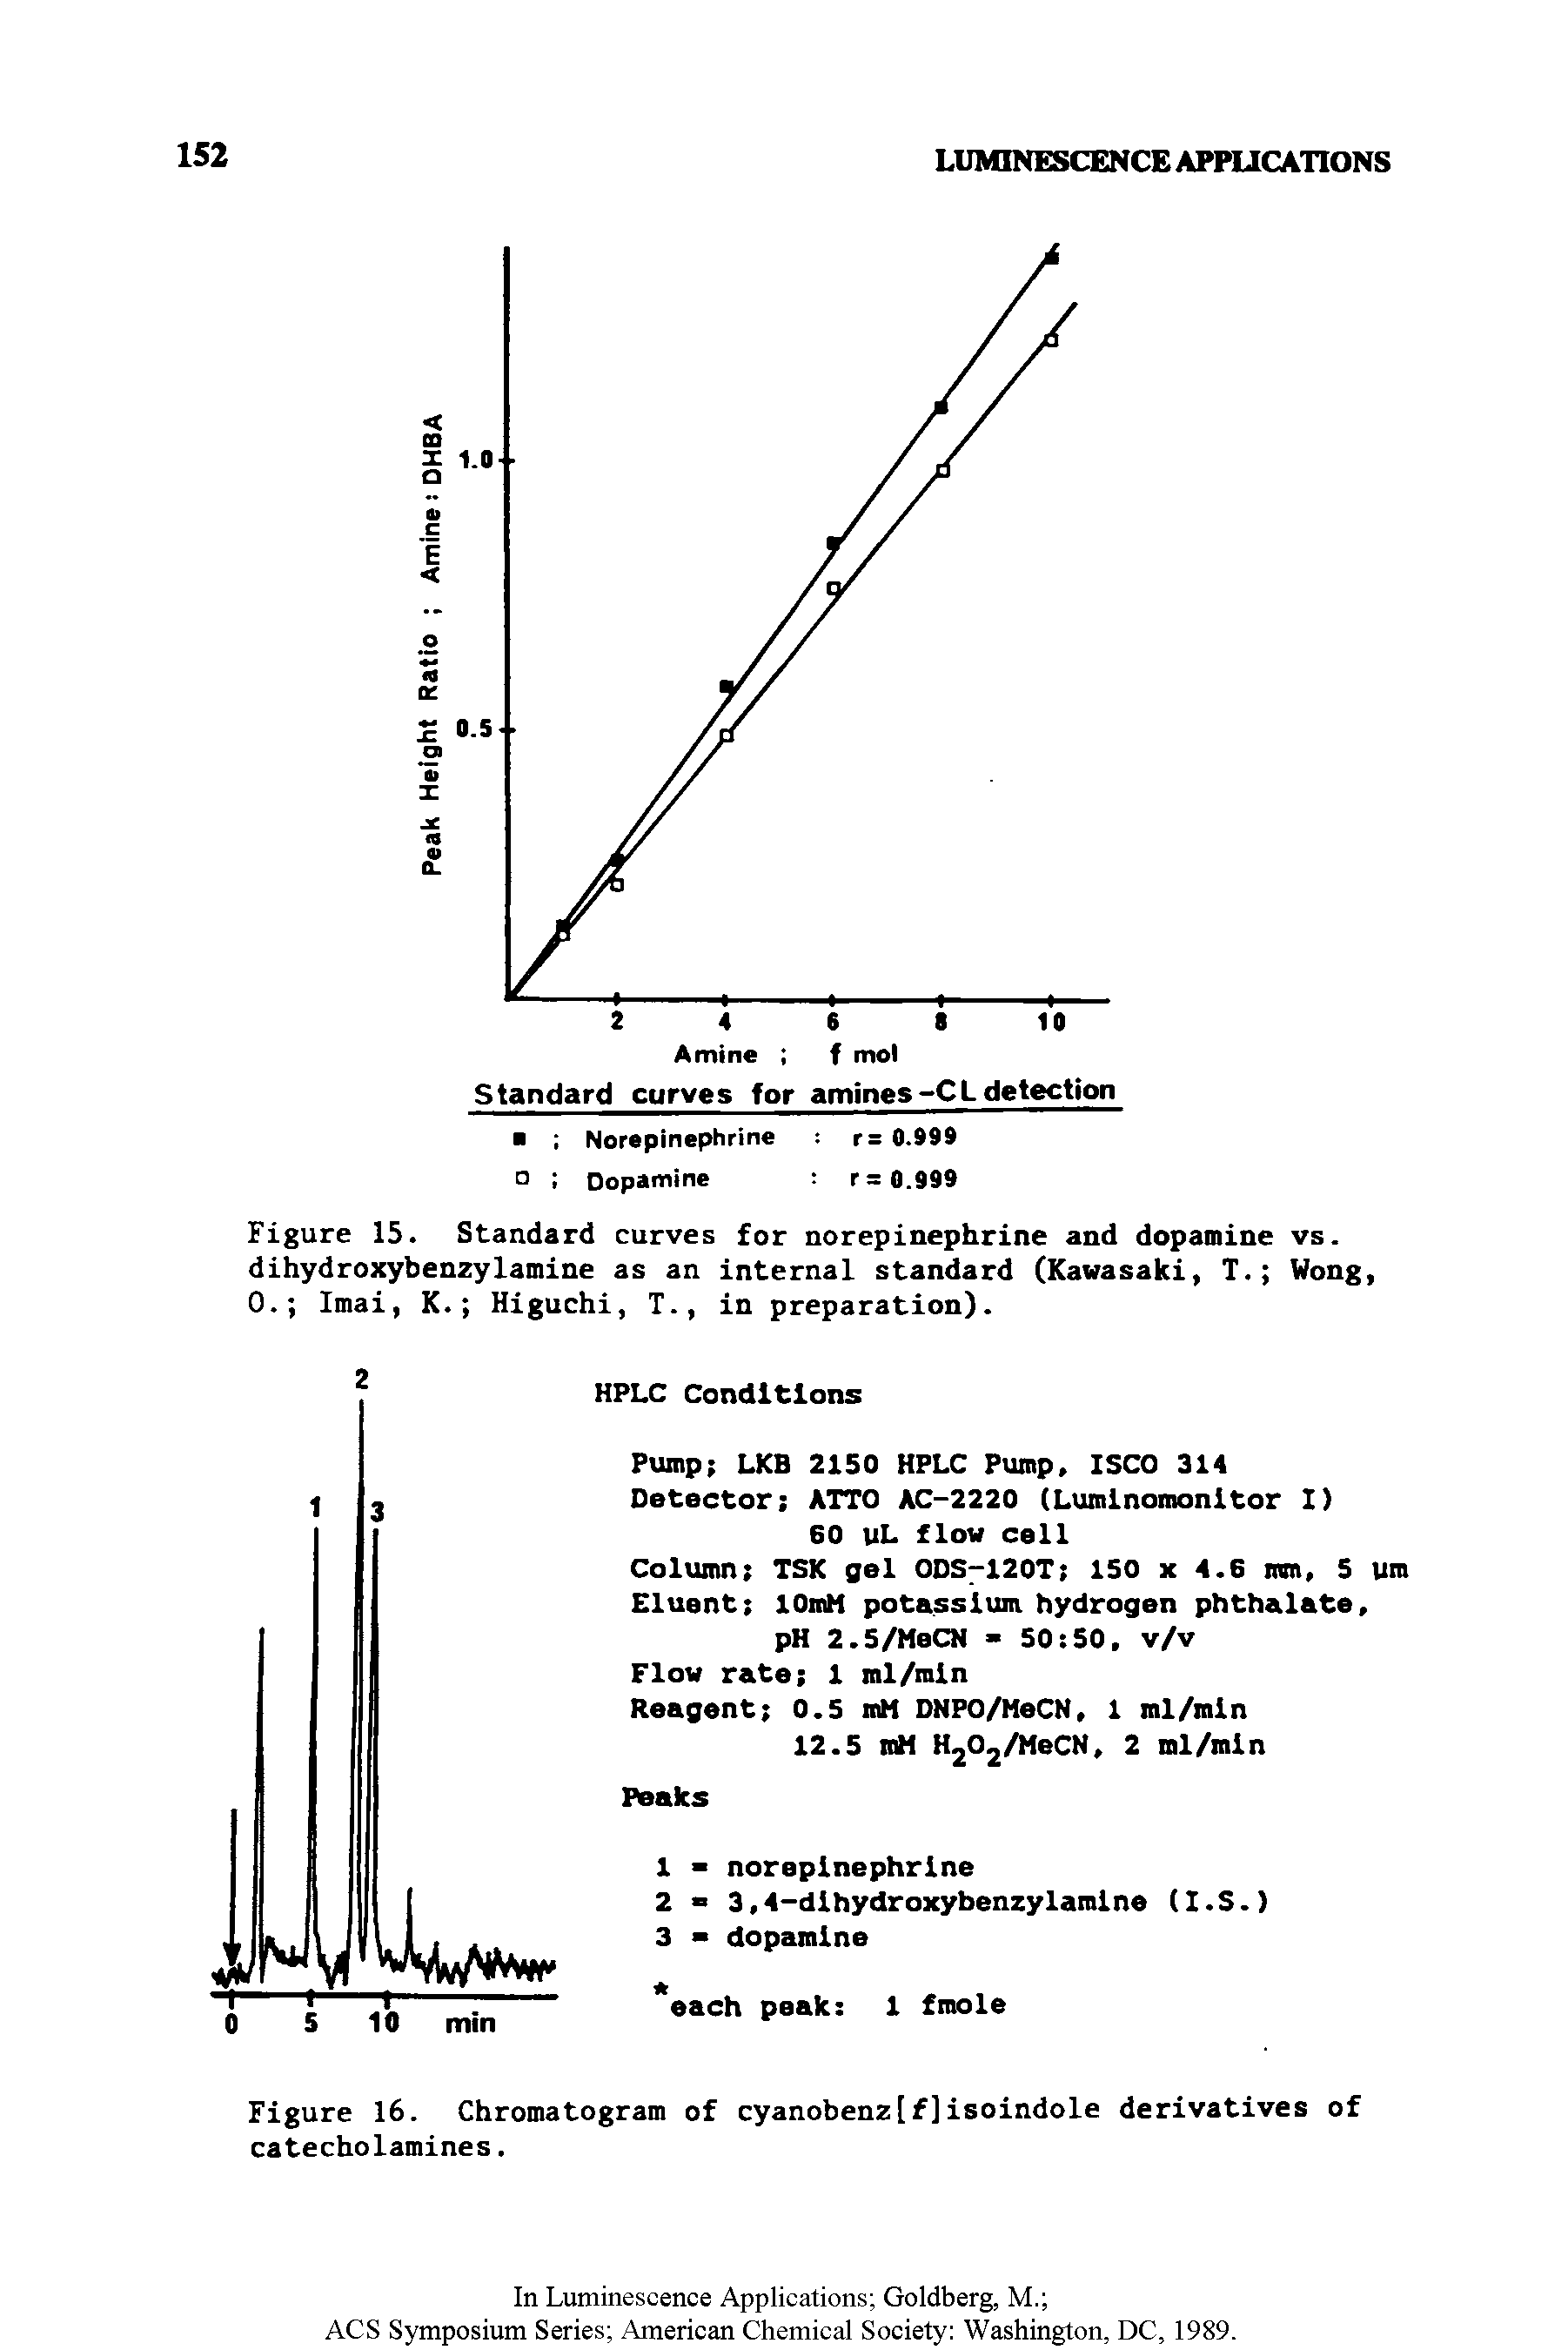 Figure 16. Chromatogram of cyanobenz[f]isoindole derivatives of catecholamines.